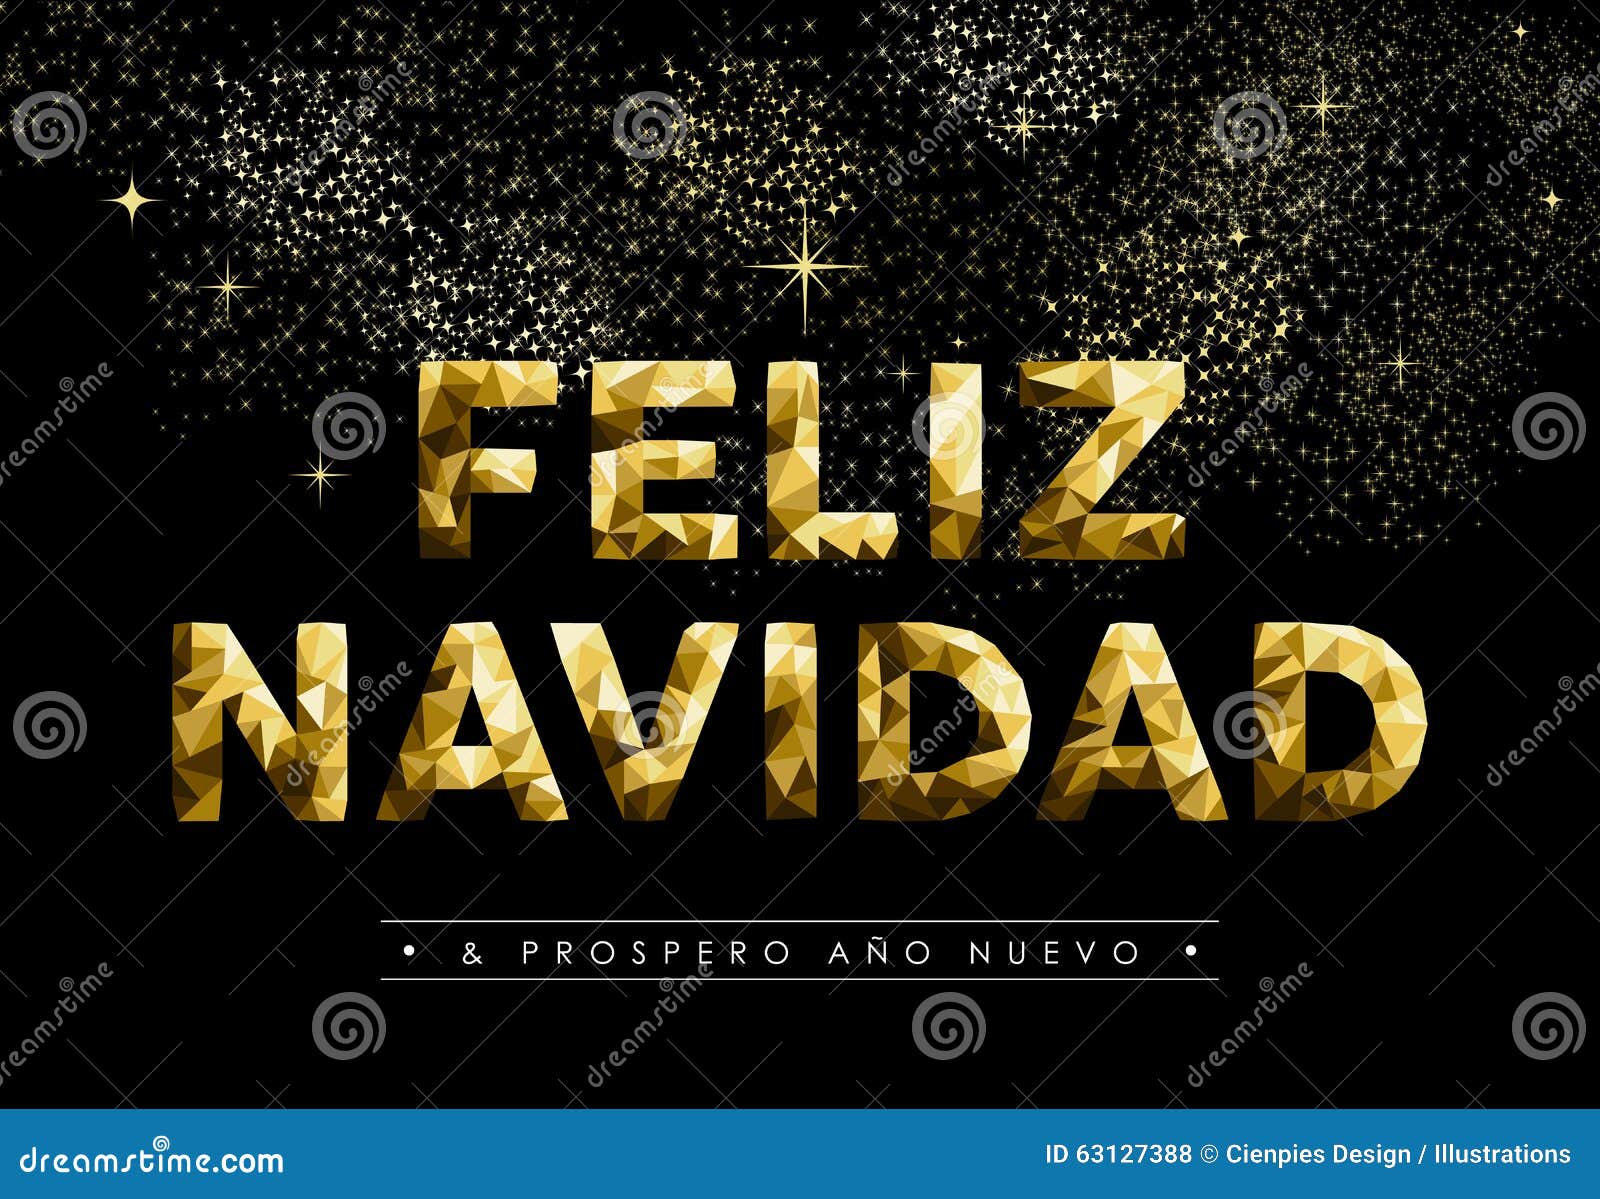 christmas new year low poly gold spanish navidad